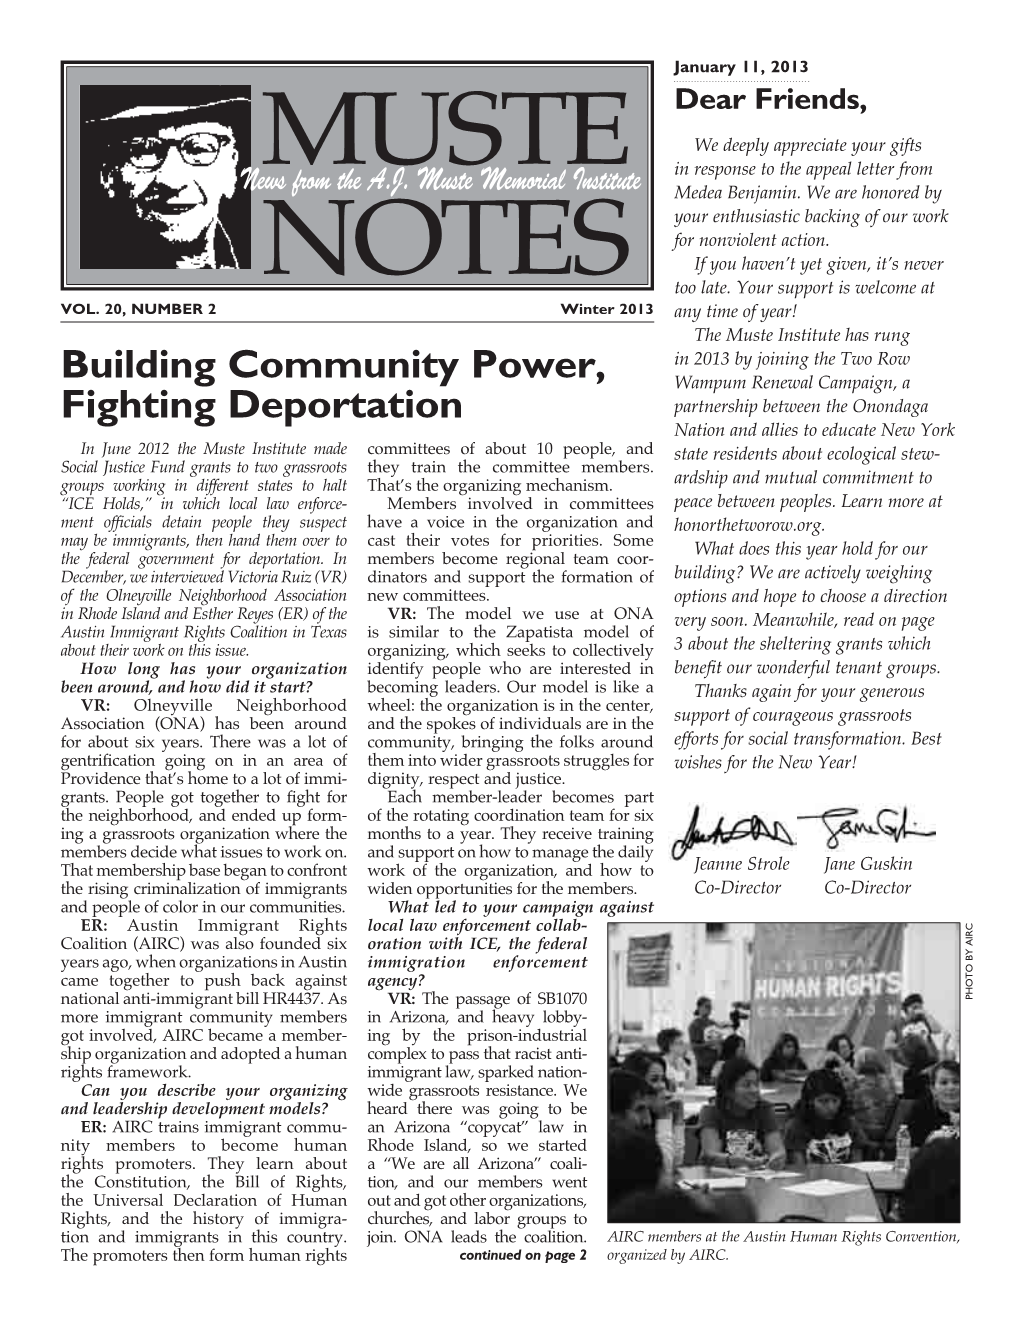 Building Community Power, Fighting Deportation